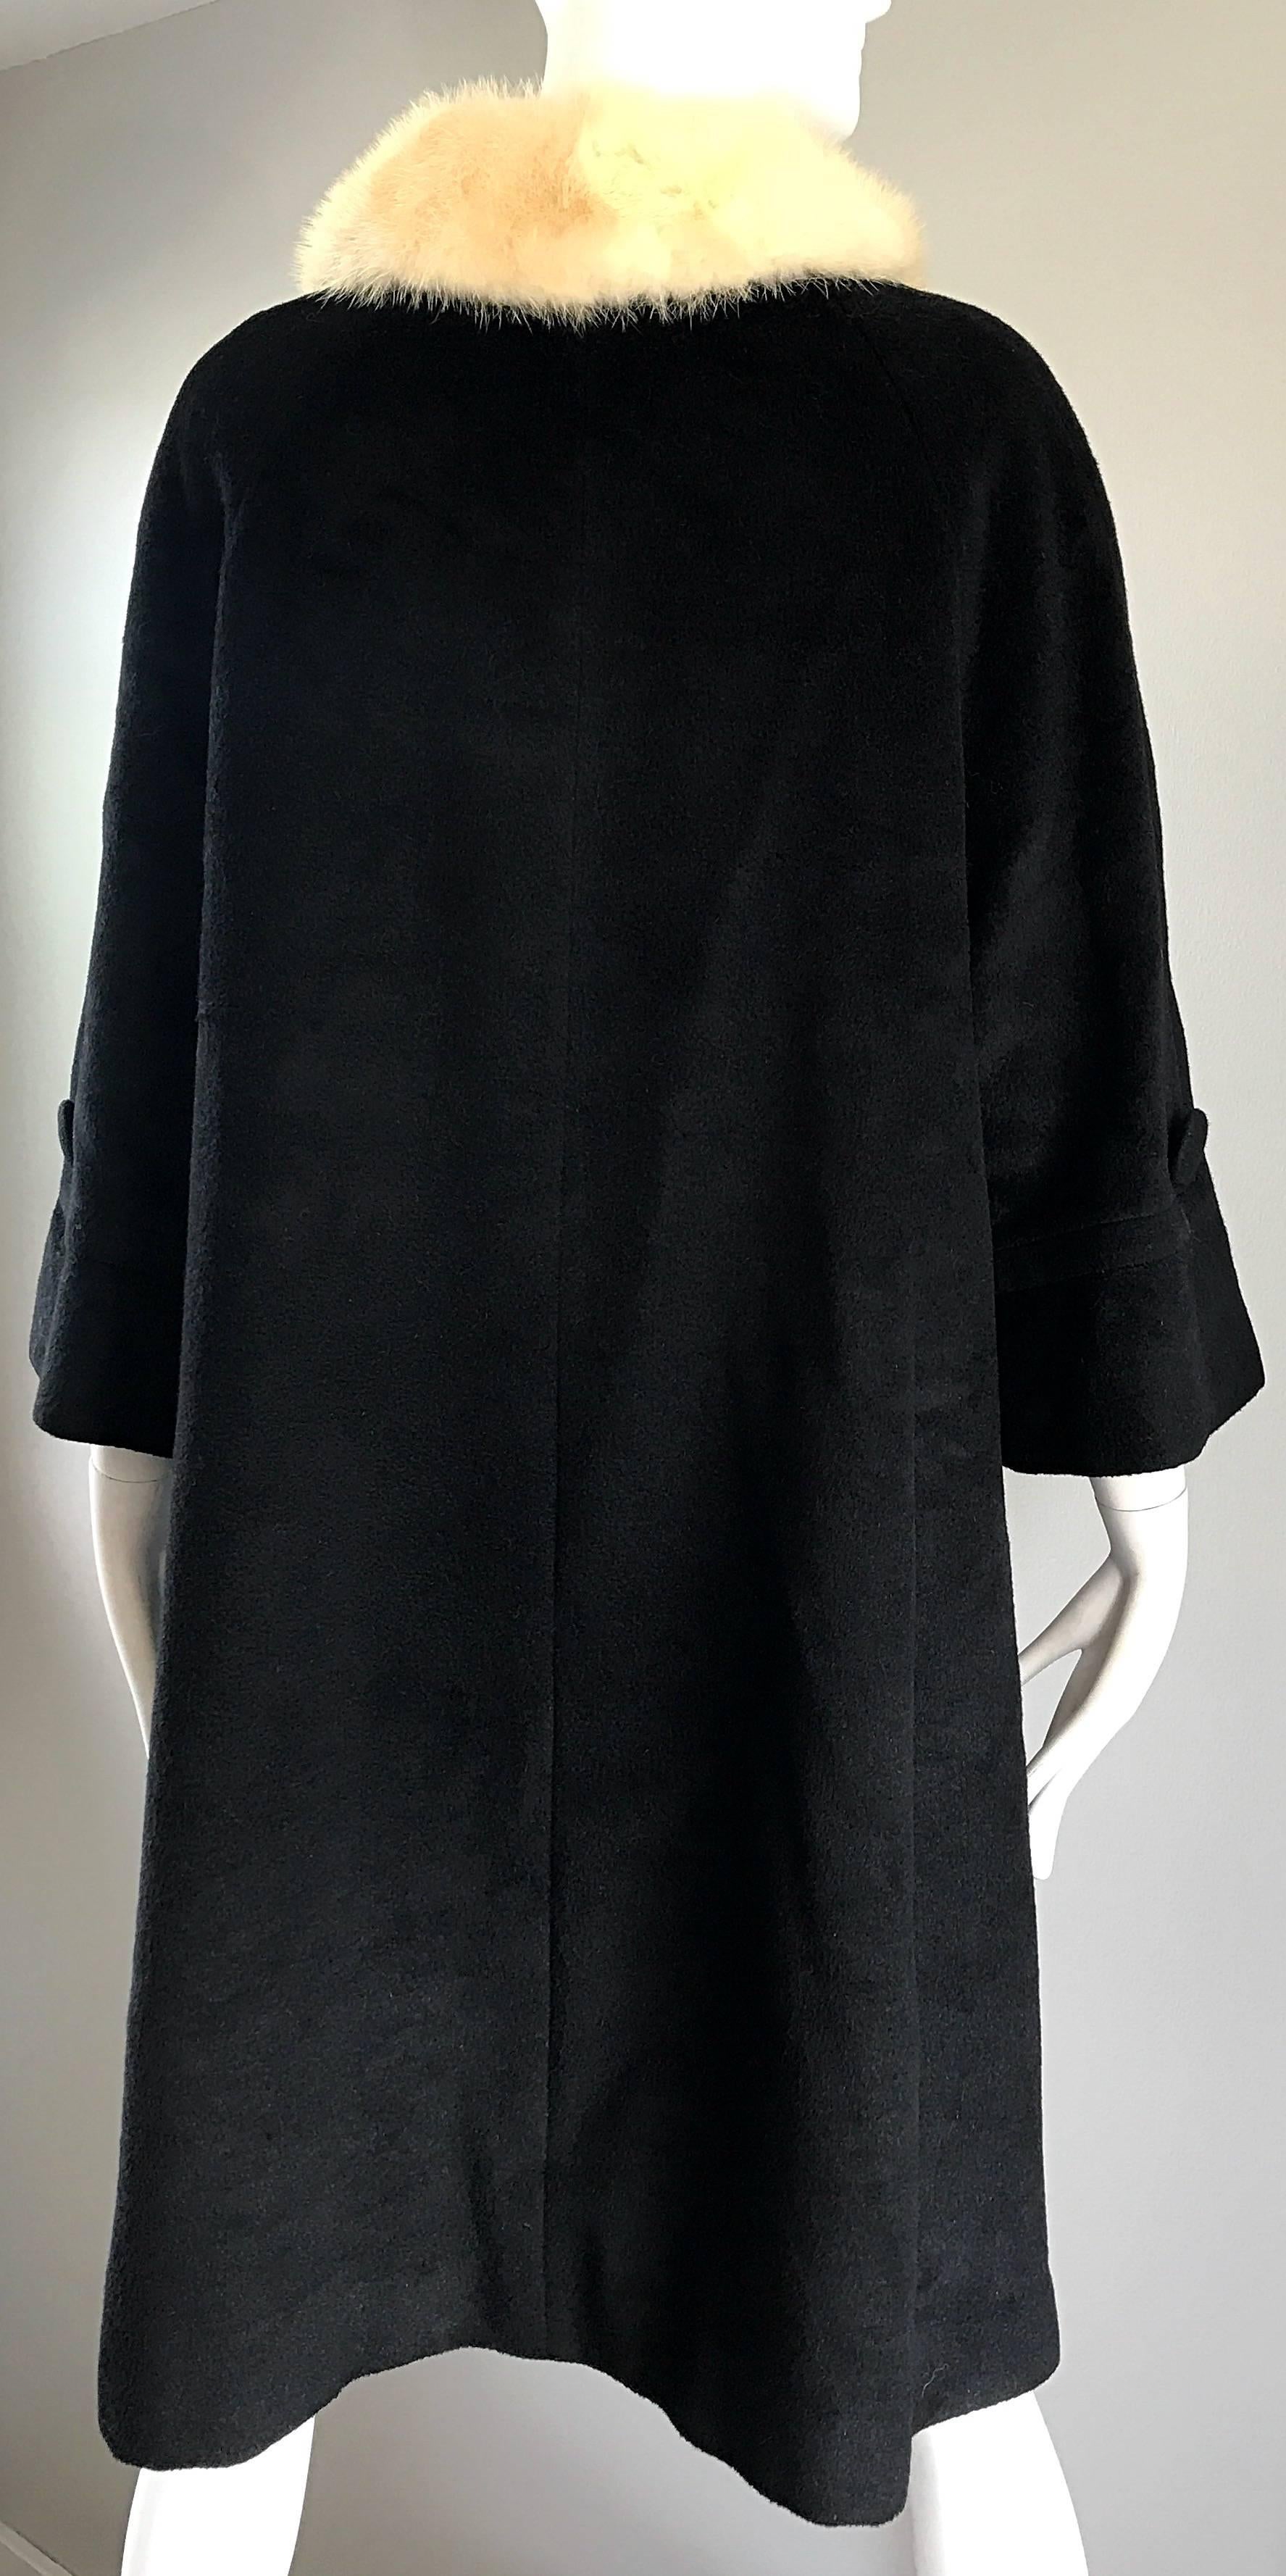 black swing coat with fur collar